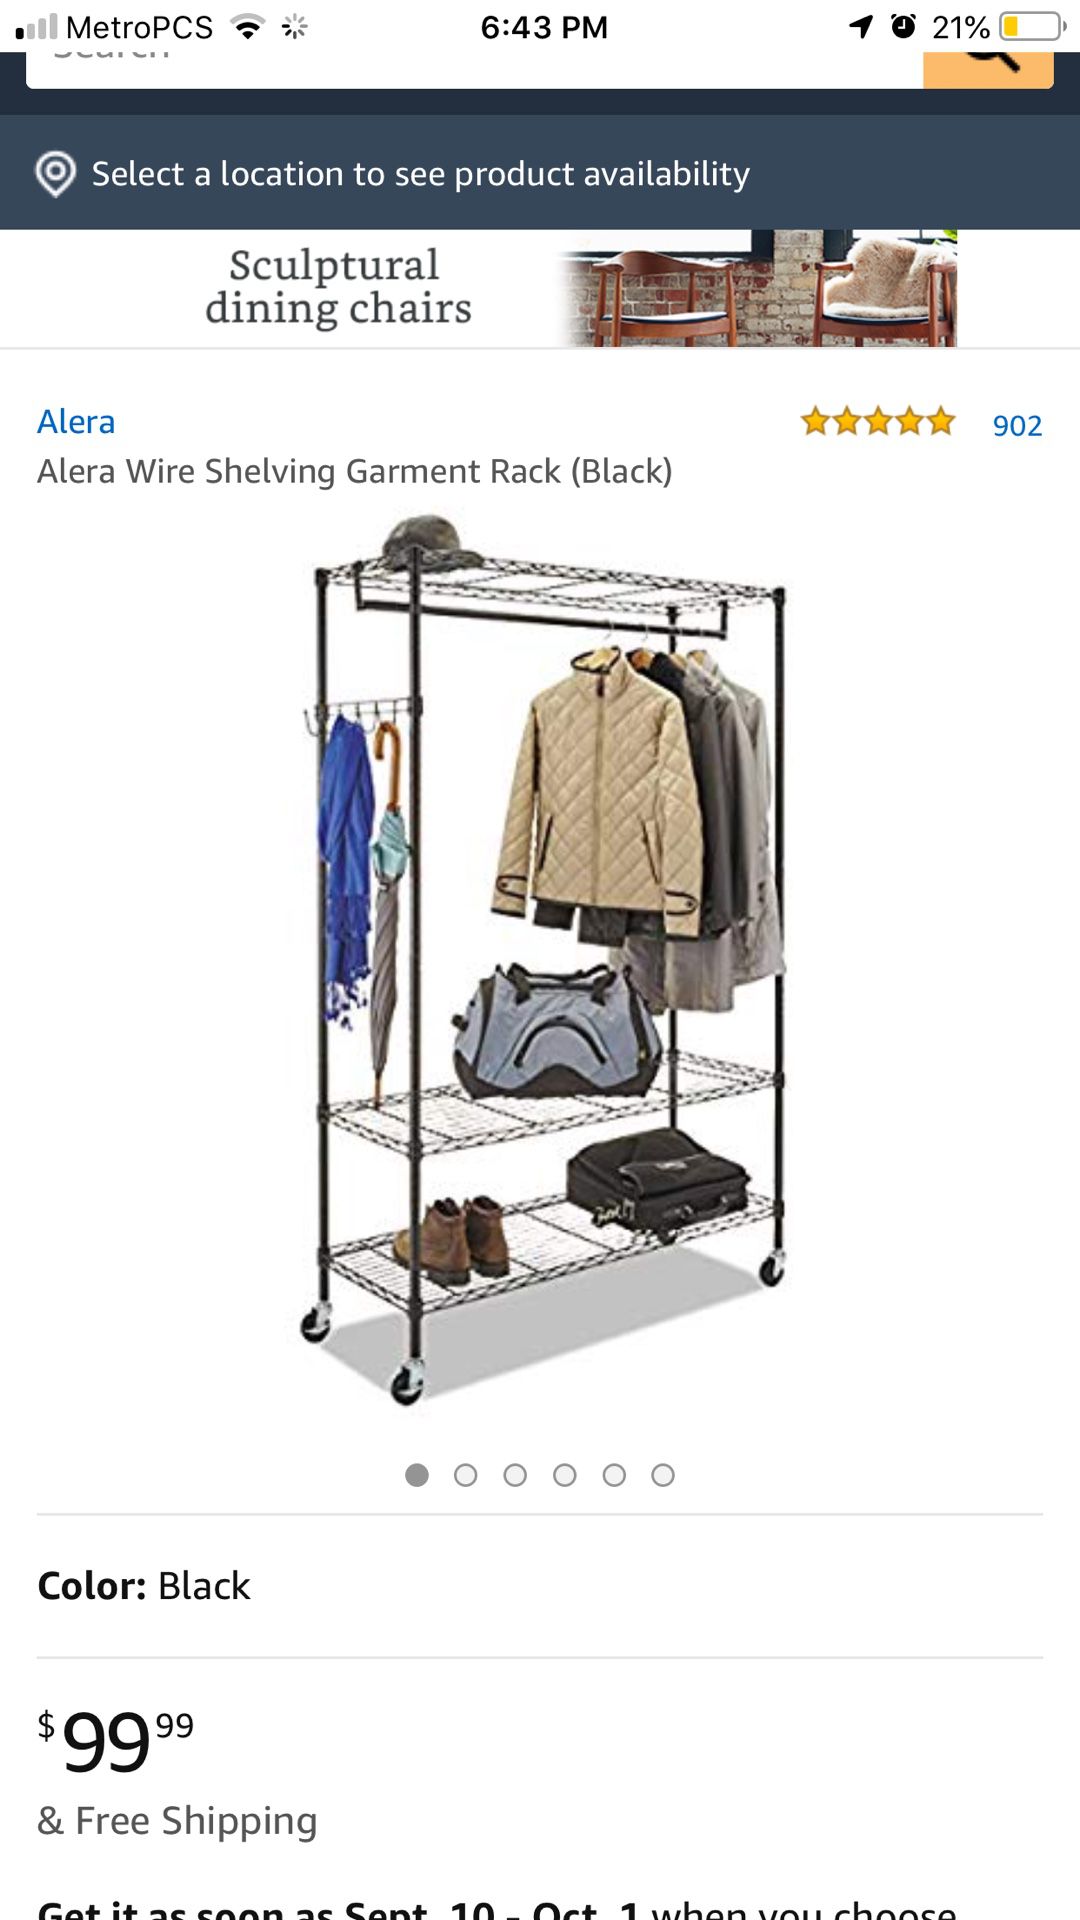 Alera clothes rack / closet organizer - chrome finish